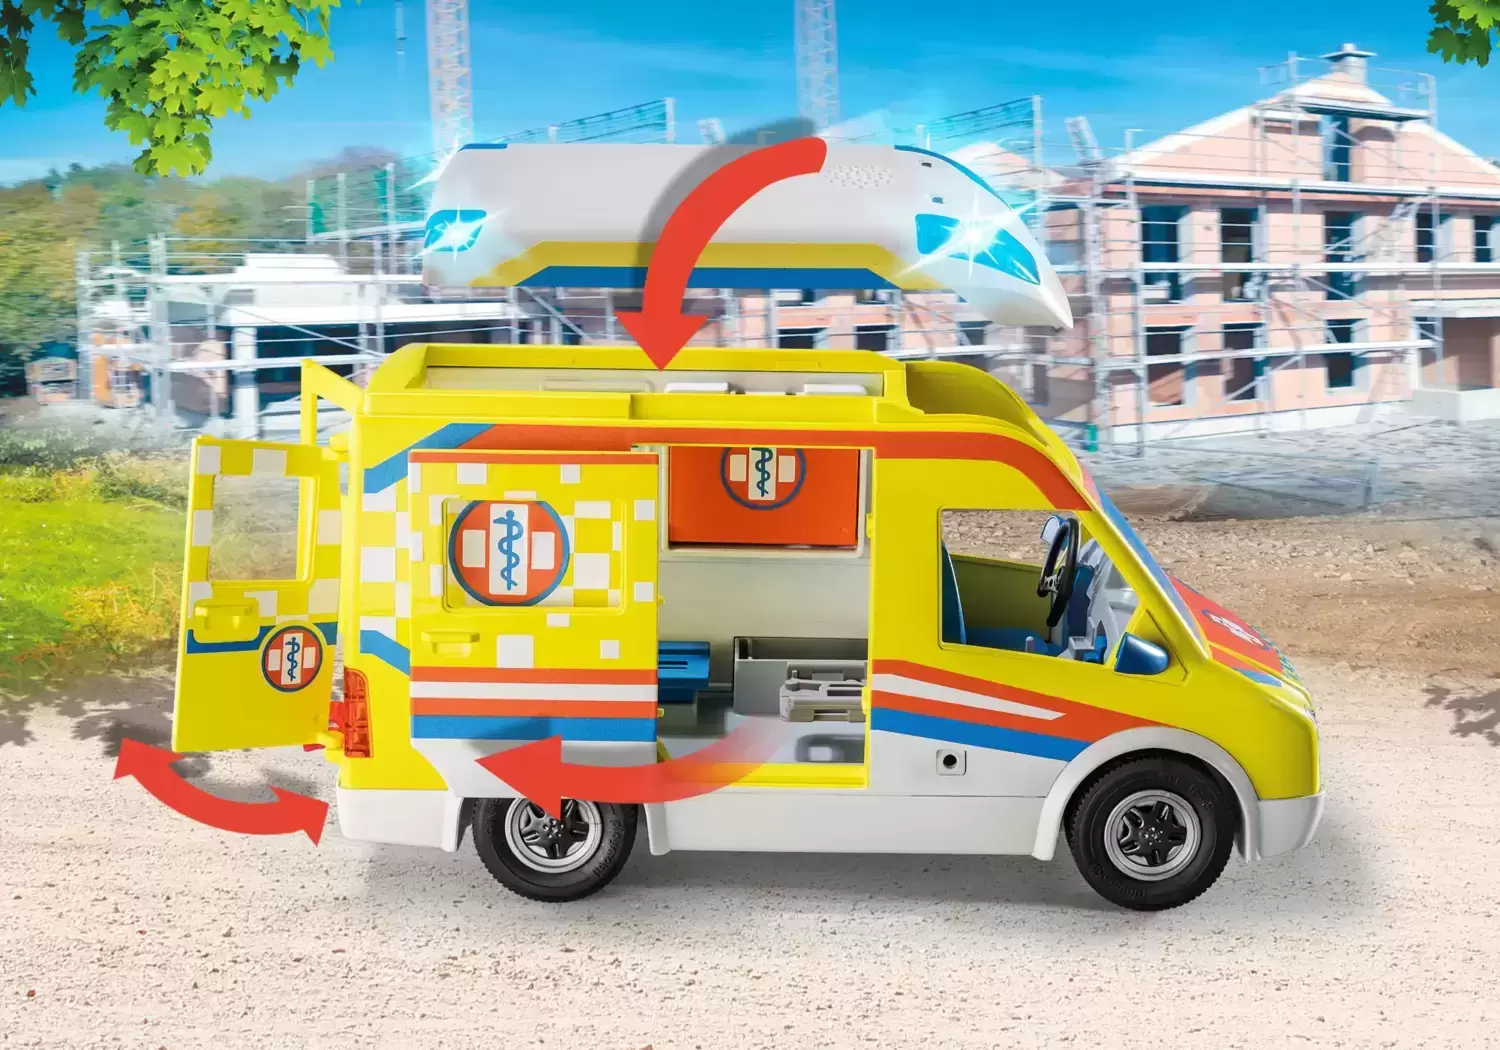 Playmobil Rescuers & Hospital - Ambulance